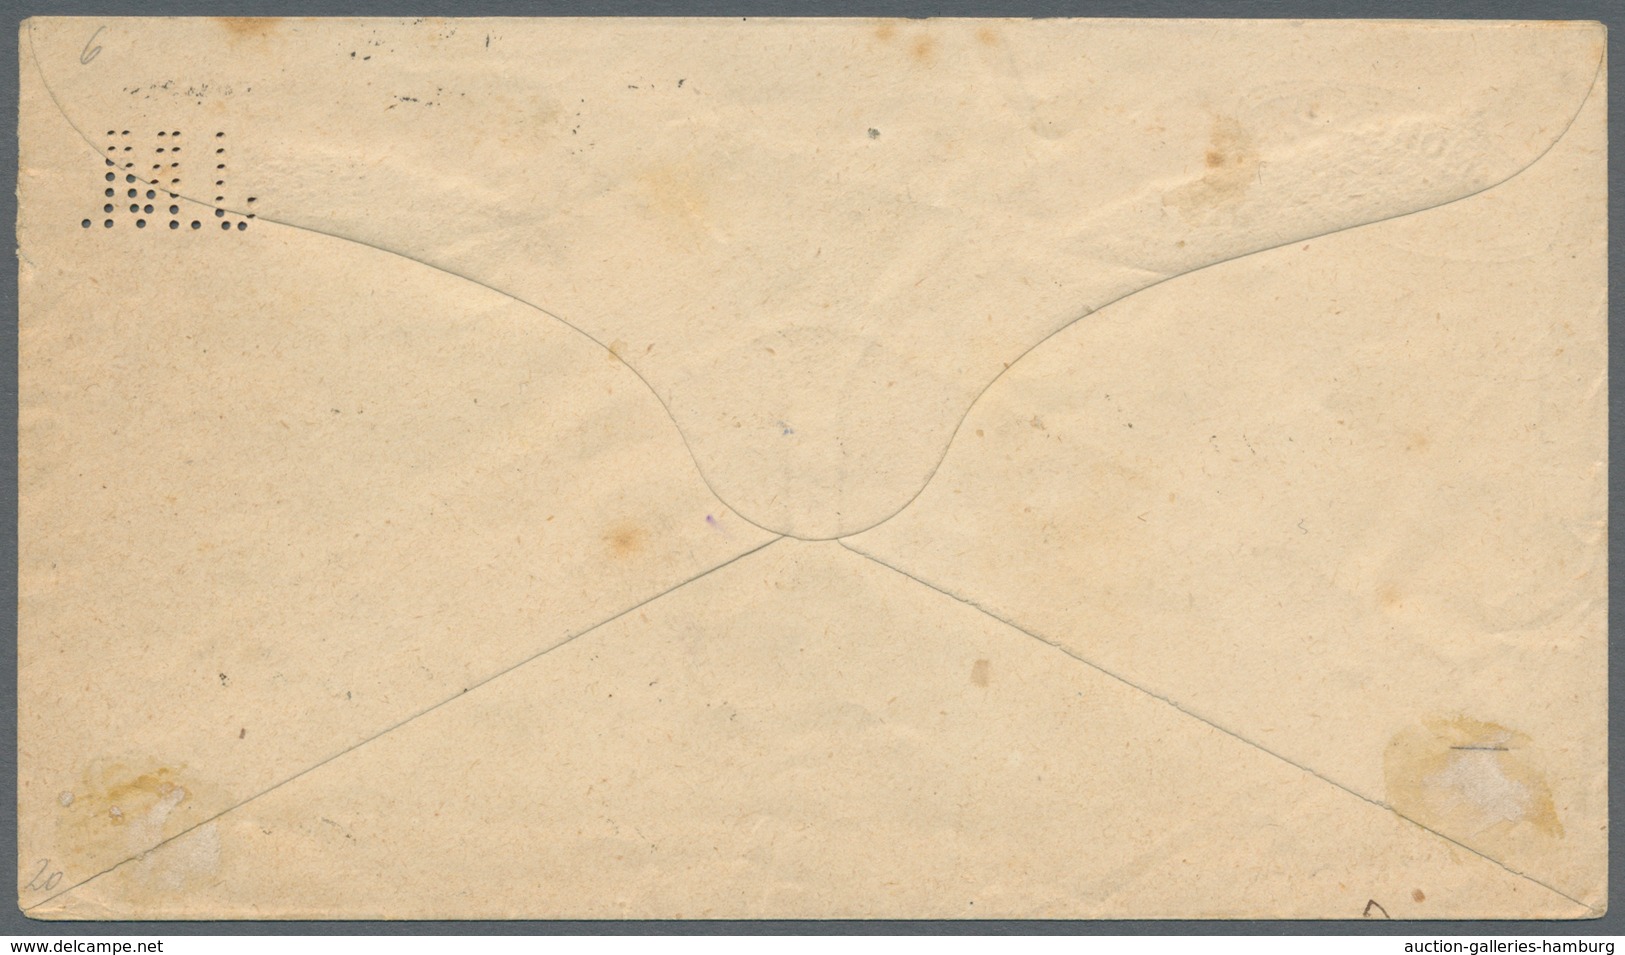 Dänemark - Ganzsachen: 1974, 8 Ore Coat Of Arms Stationery Envelope Perfinned "J.M.", Sender "J. MOR - Ganzsachen